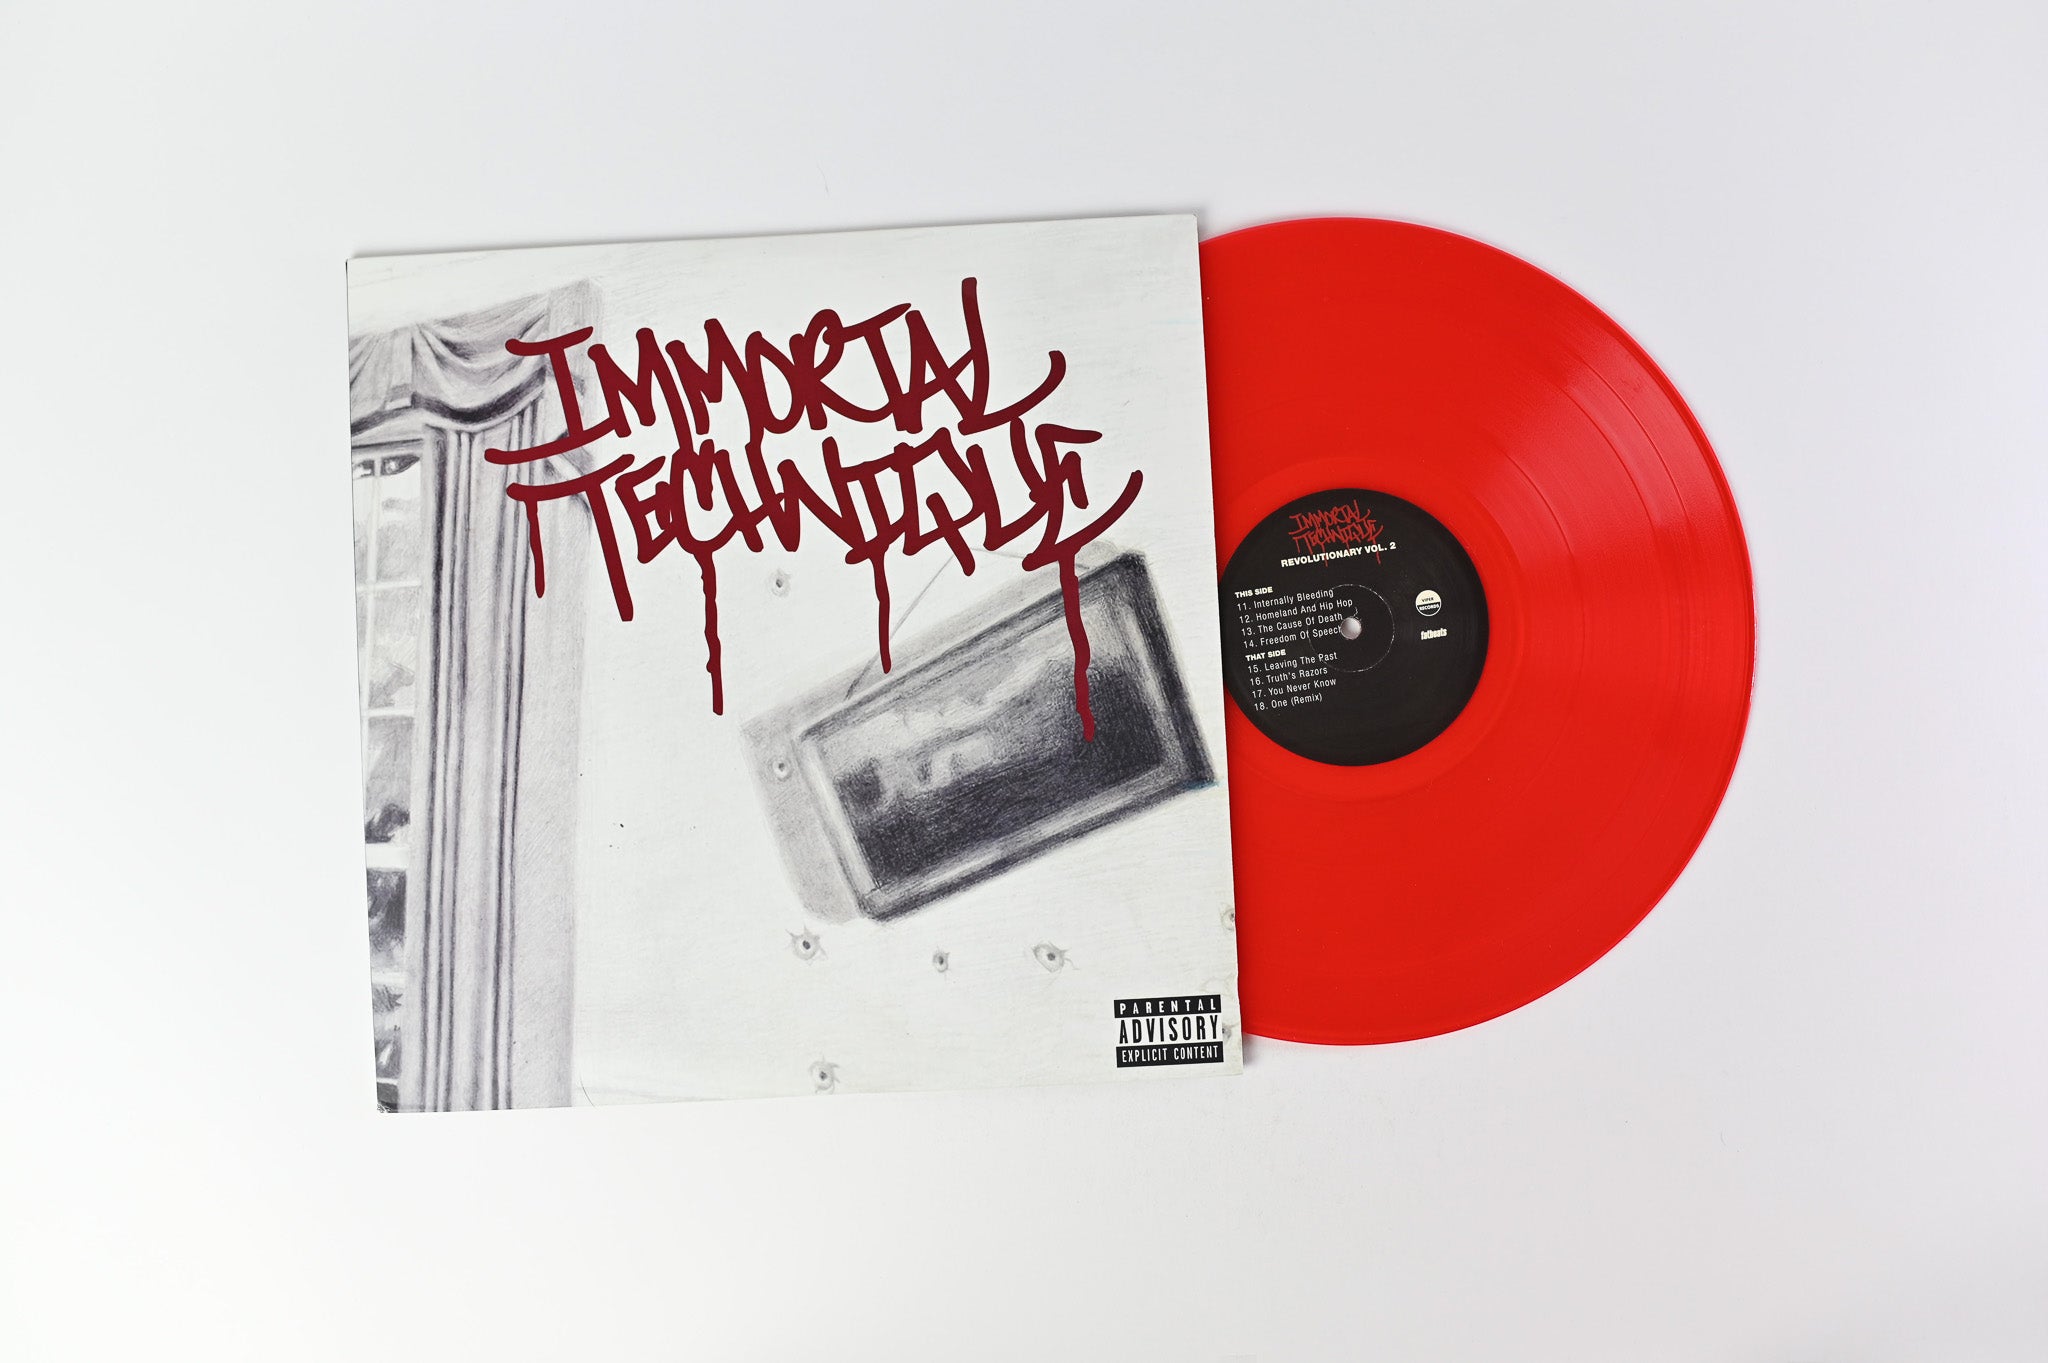 Immortal Technique - Revolutionary Vol. 2 on Viper Ltd Red Translucent Reissue